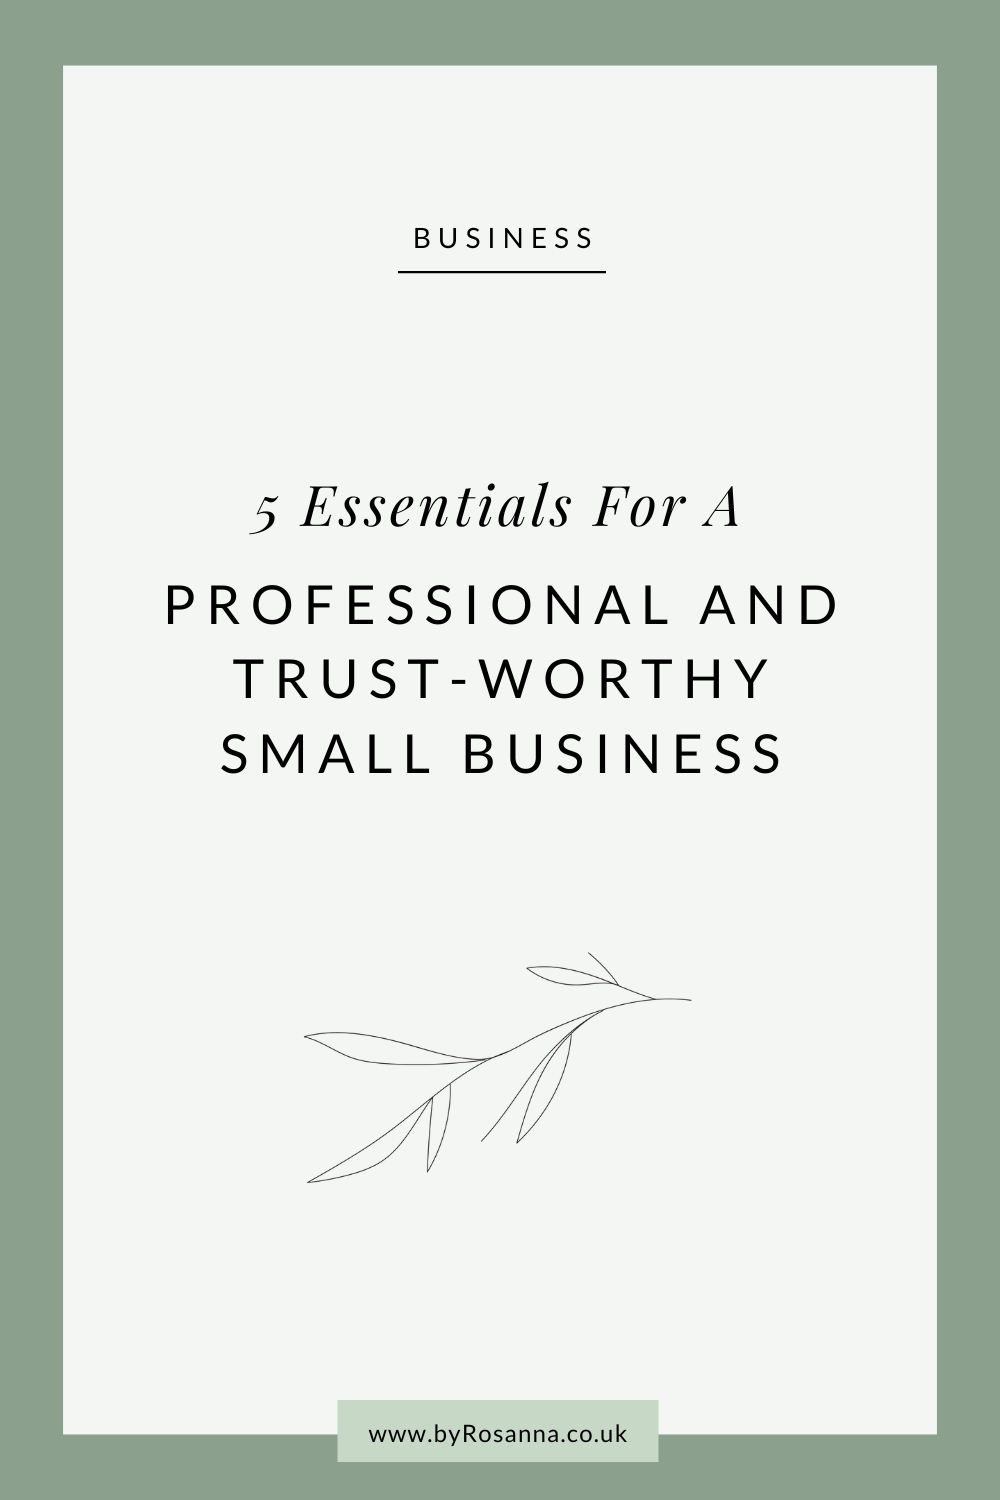 Small-Business Essentials